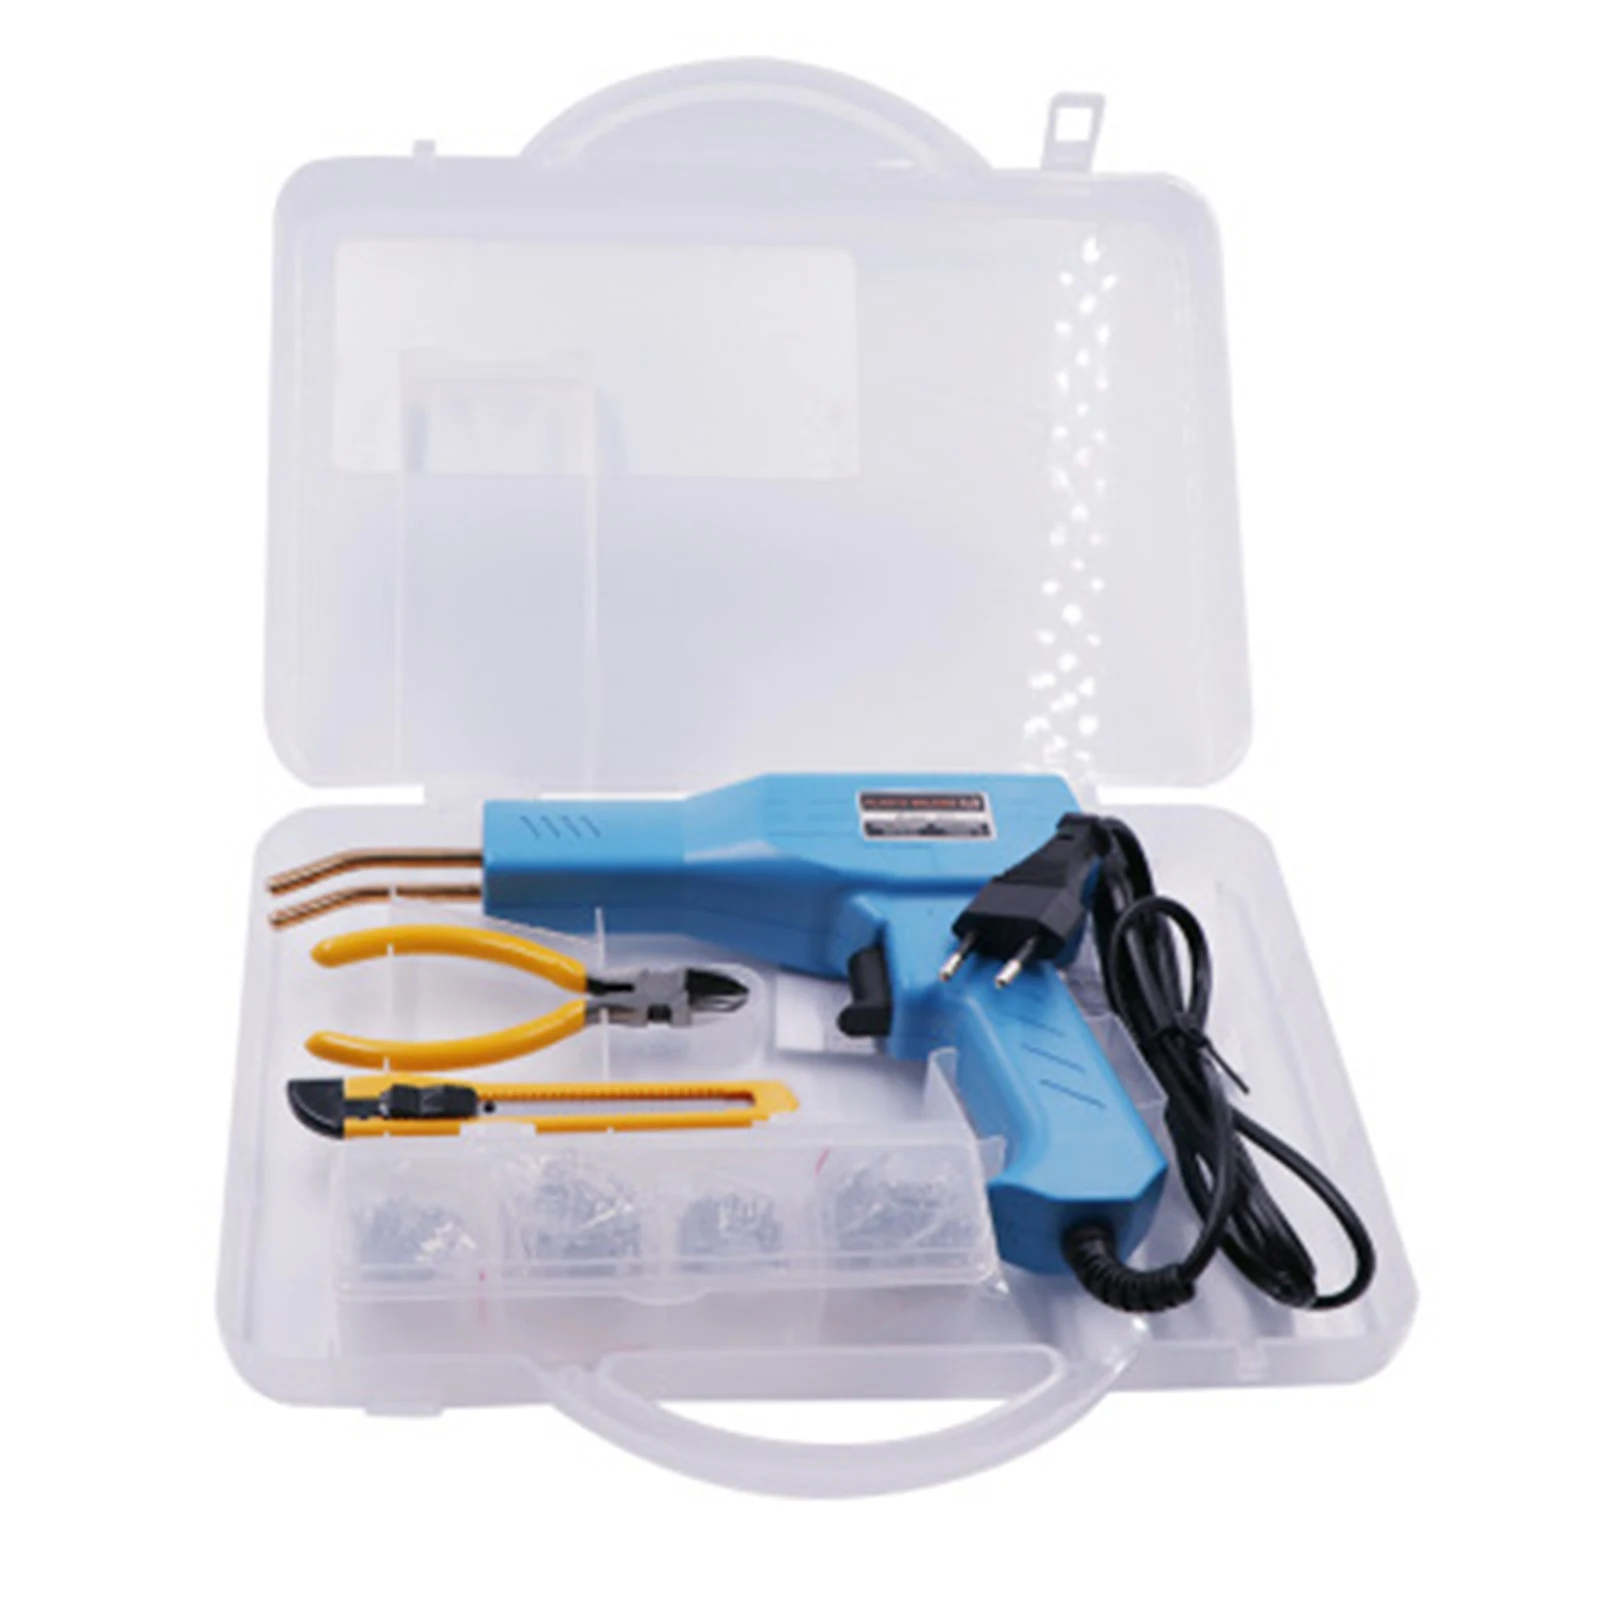 

Reusable Plastic Welder Kit for Bumper Repair 50w Hot Stapler Welding Tool with Carry Case Handy Machine Home Soldering Supplies